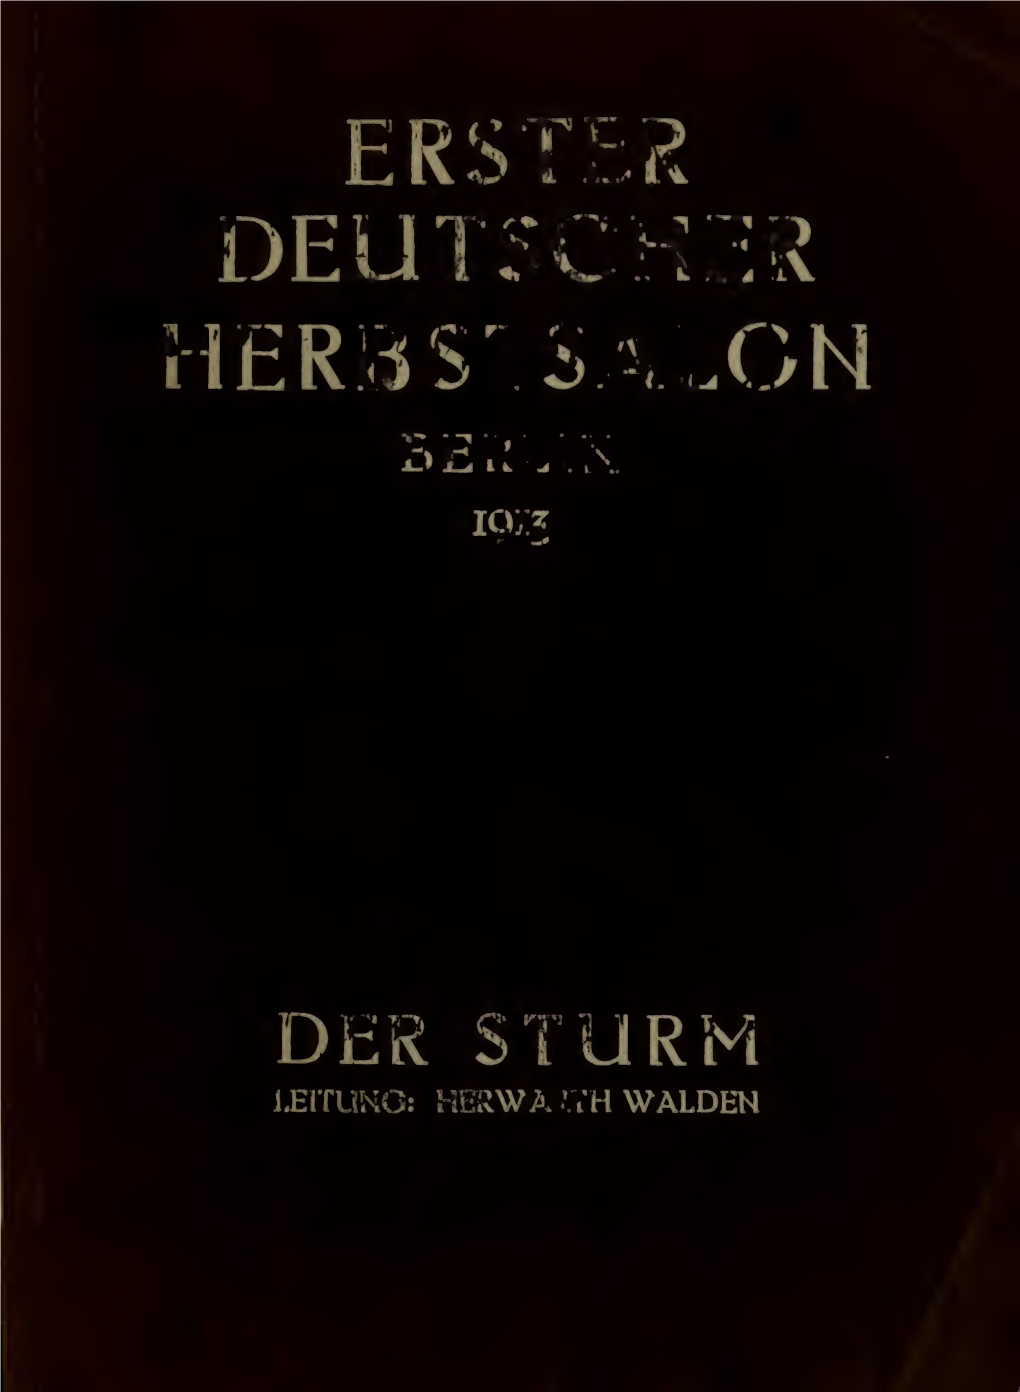 Erster Deutscher Herbstsalon, Berlin 1913